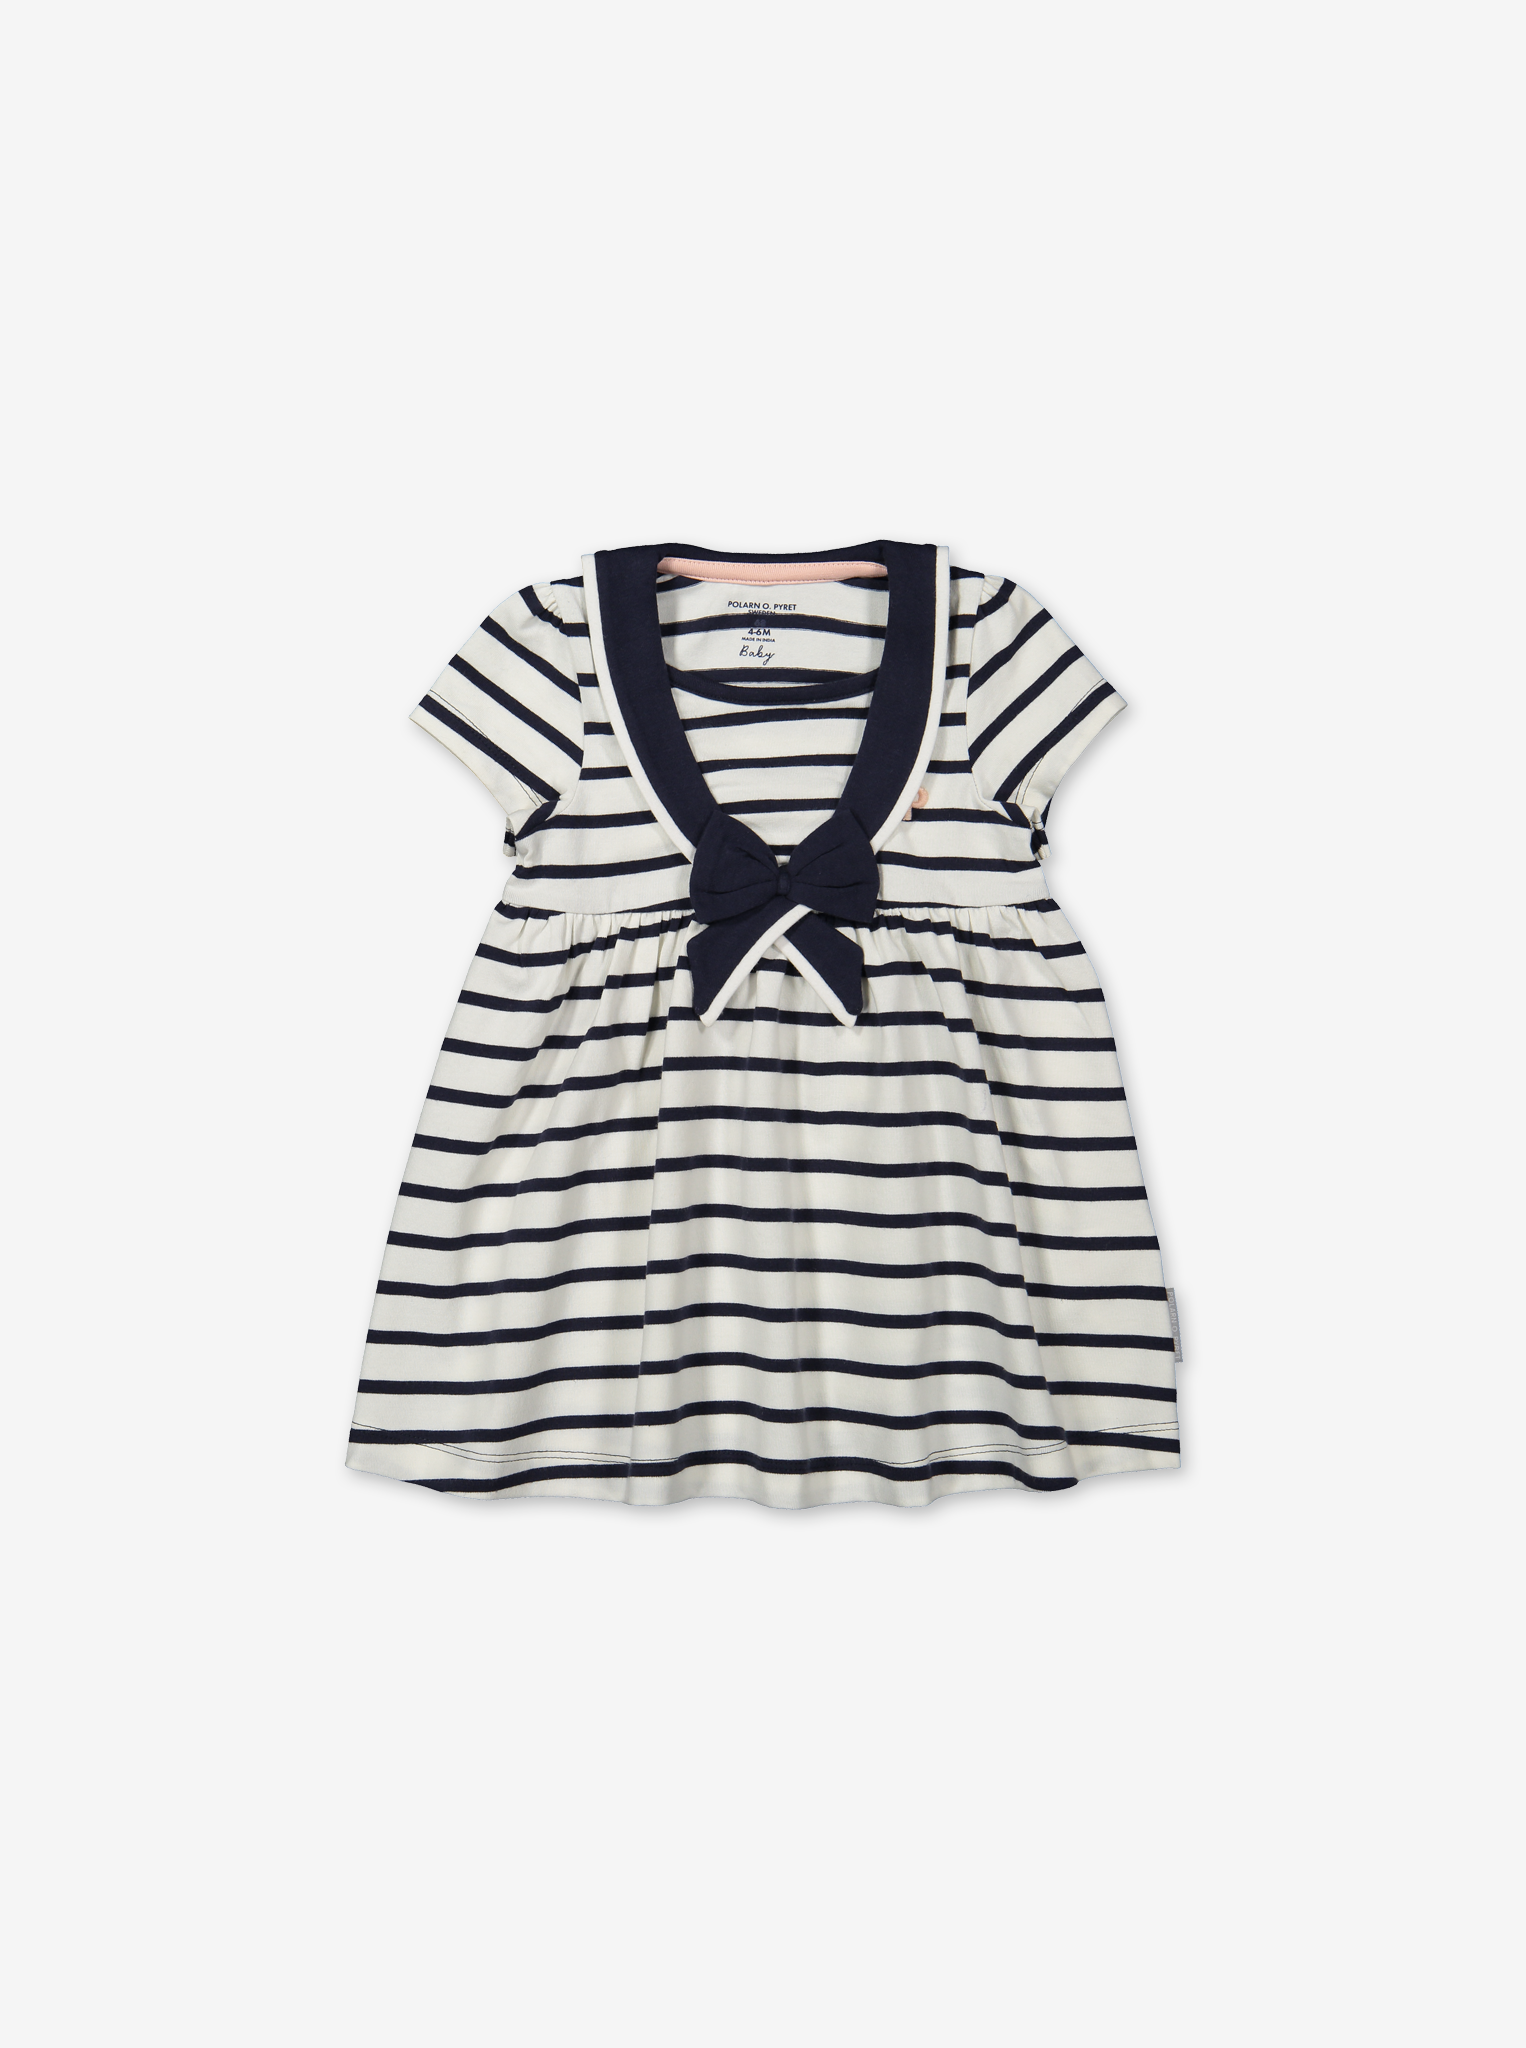 Stripe sailor dress for baby